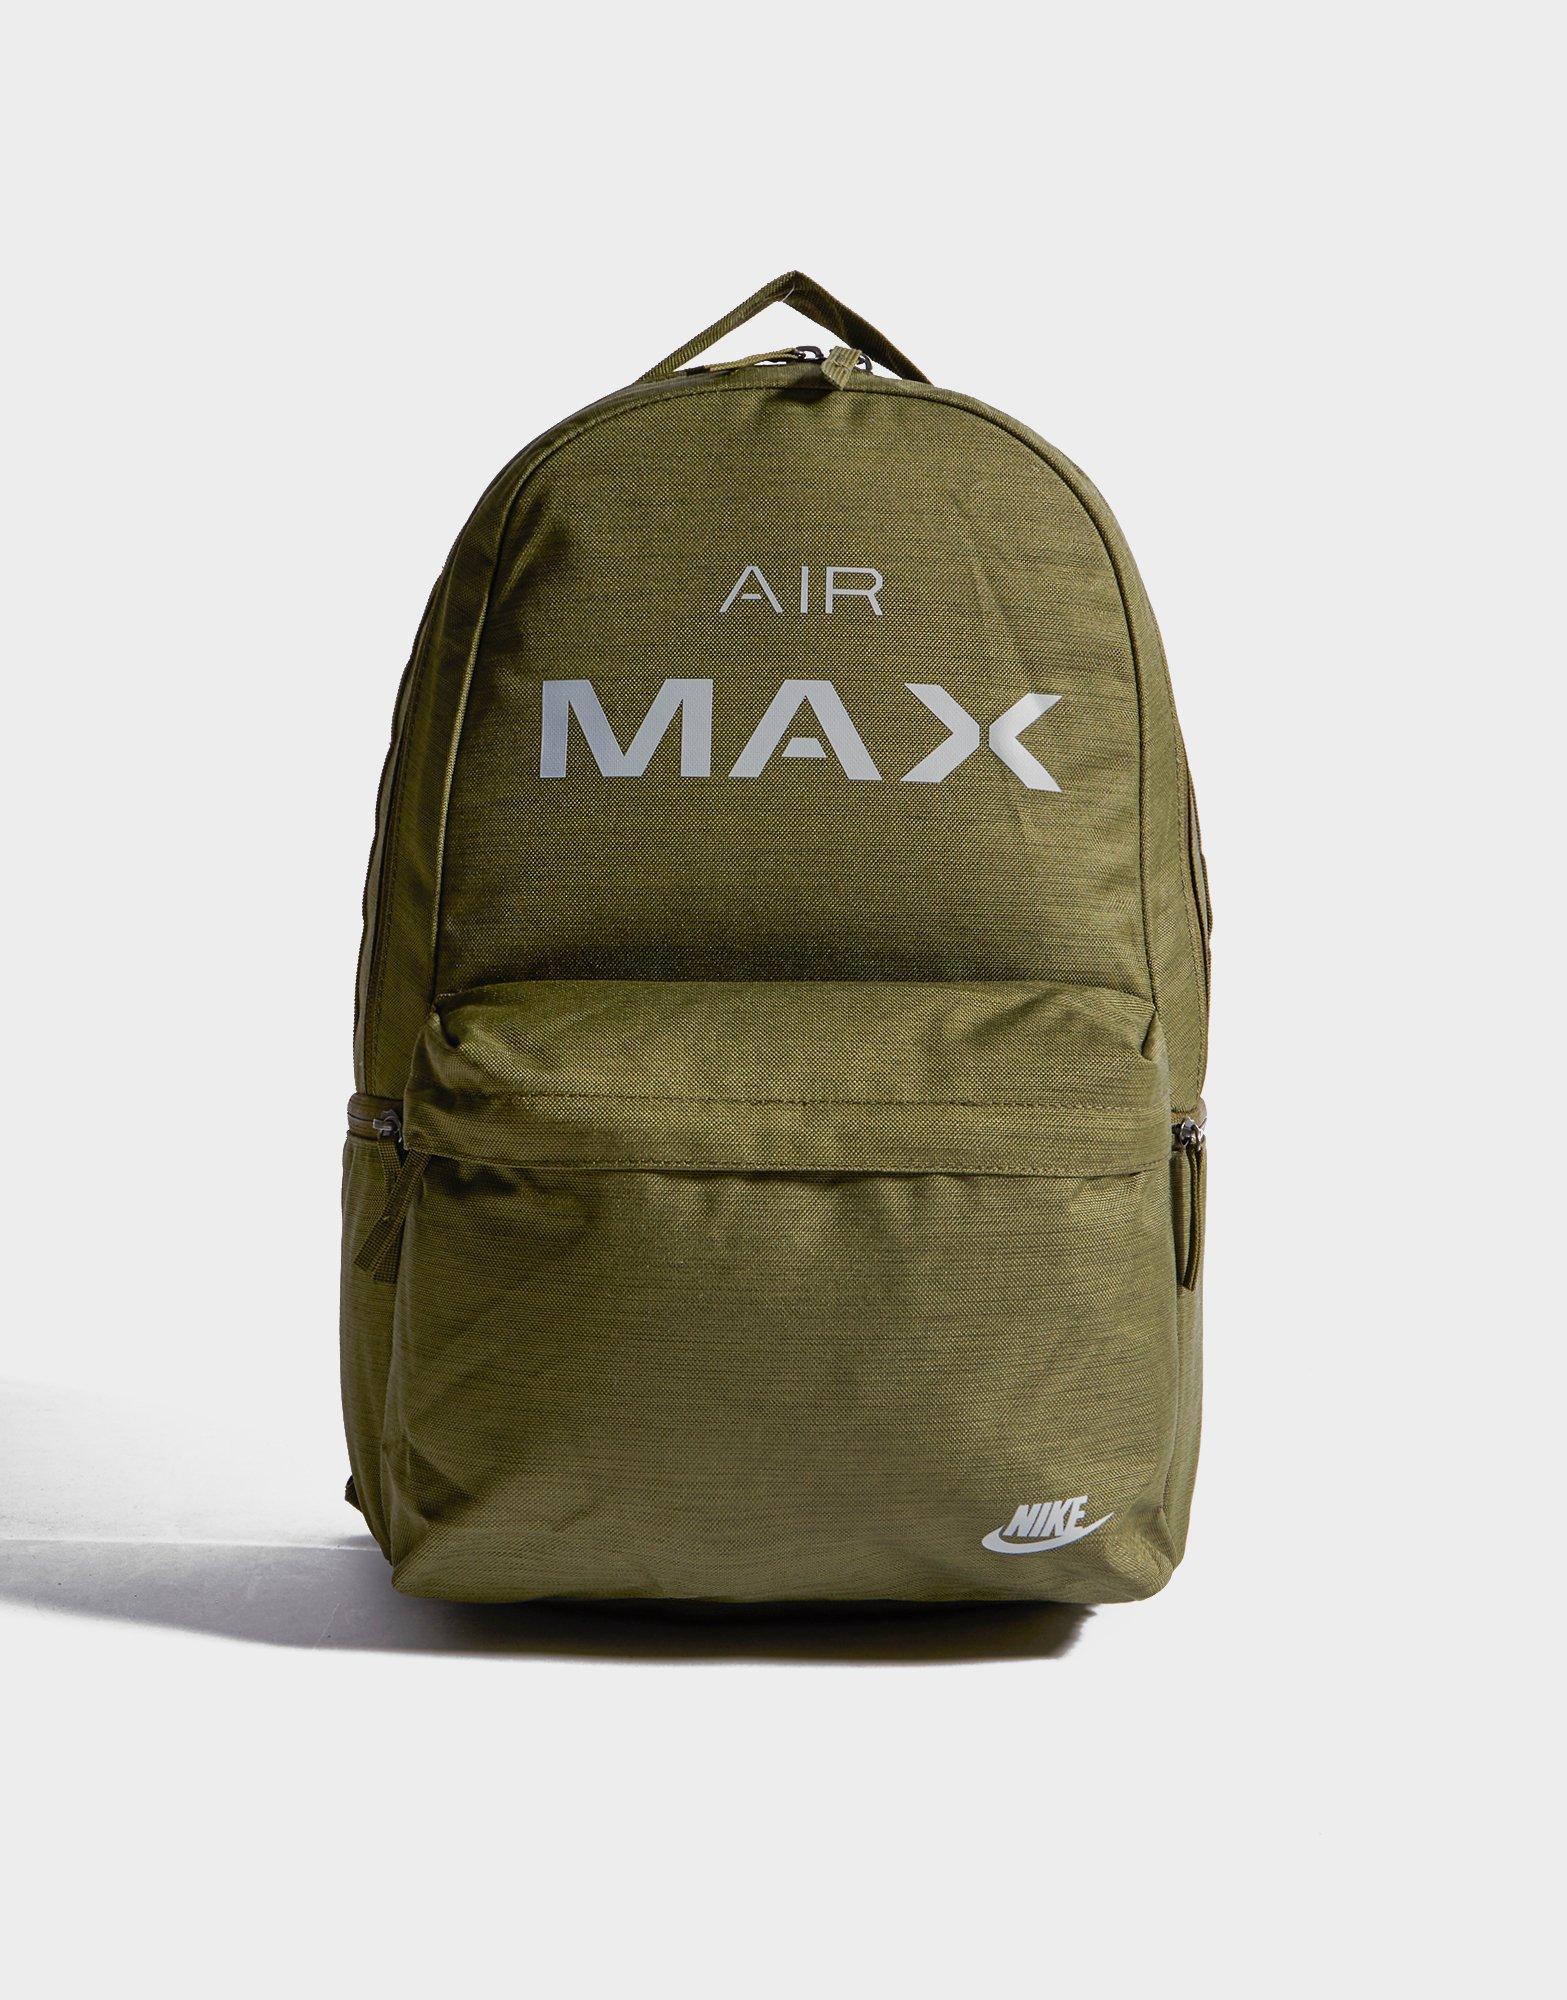 nike air backpack green, OFF 76%,Buy!